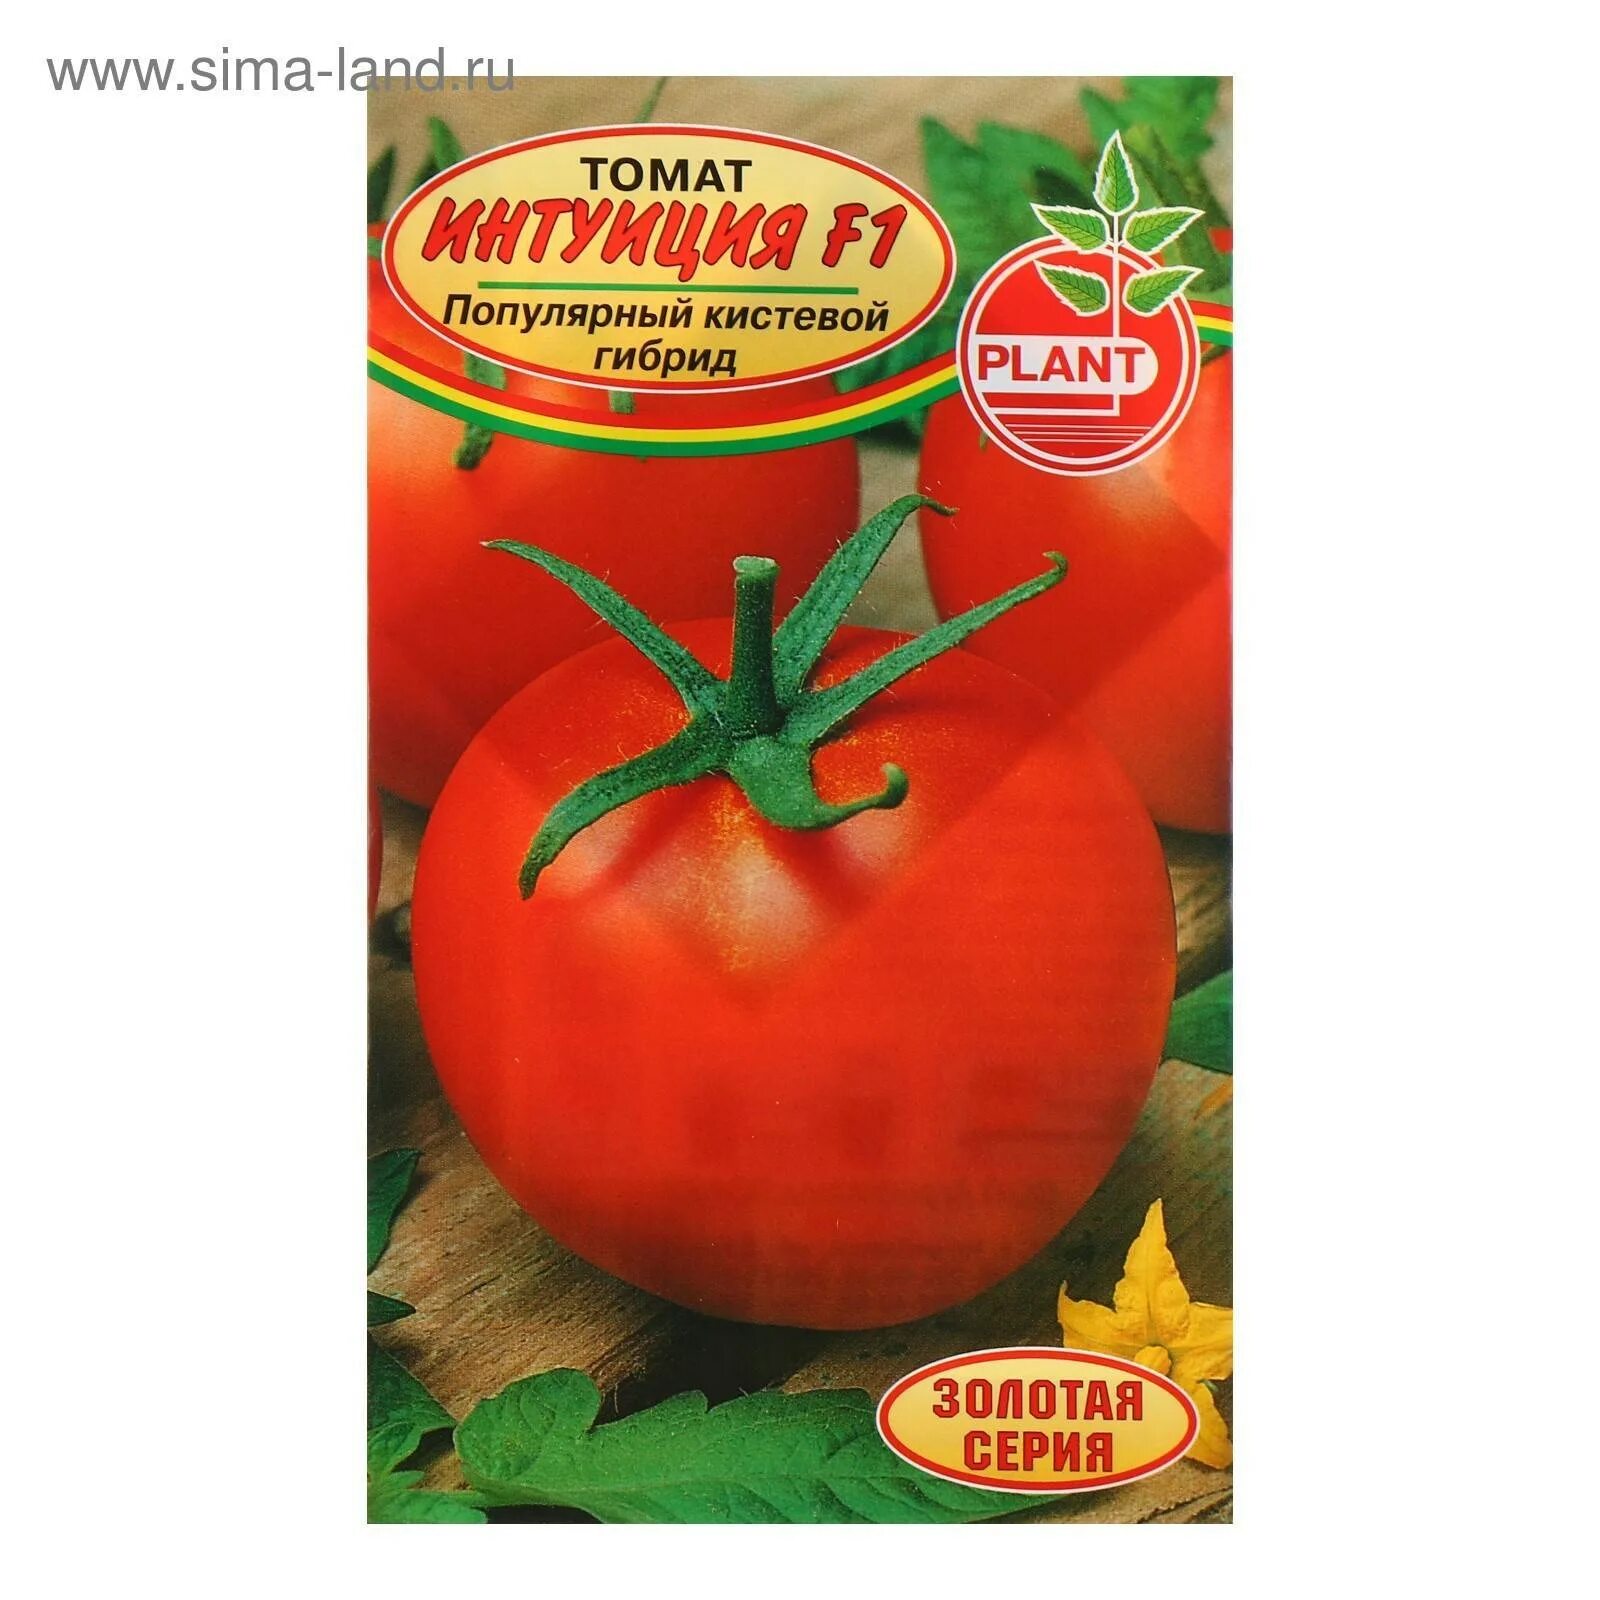 Сорт томатов интуиция отзывы. Томат интуиция f1. Семена помидор интуиция. Томат интуиция семена. Сорт помидор интуиция.